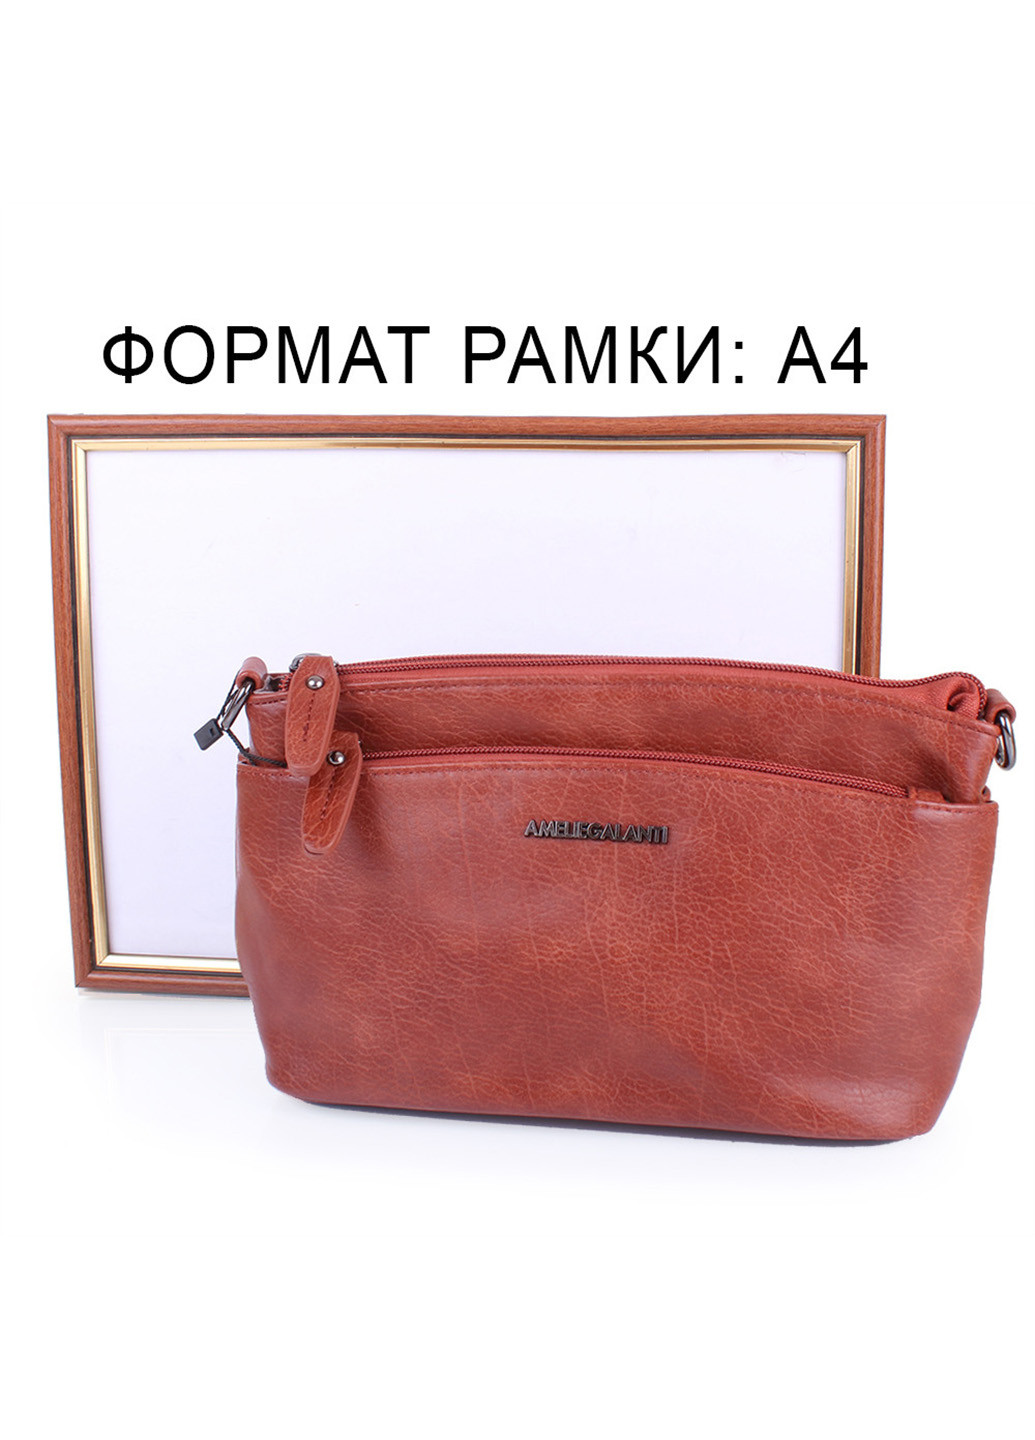 Женская мини-сумка 23х13х9 см Amelie Galanti (210338527)